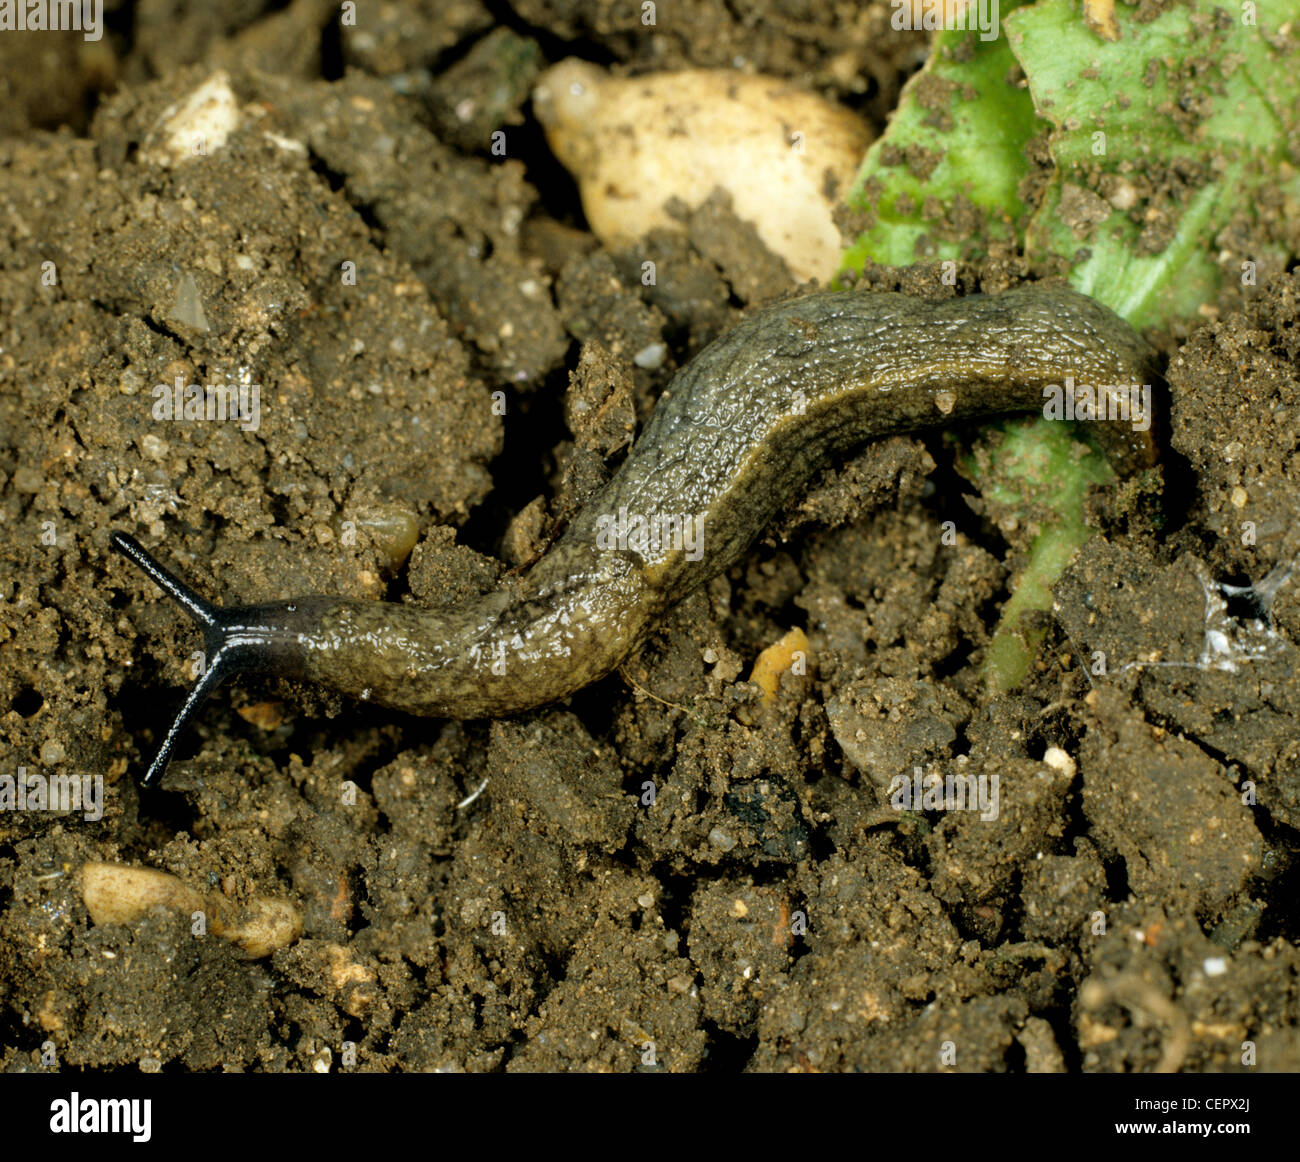 A keeled slug (Tandonia budapestensis) on damp soil Stock Photo